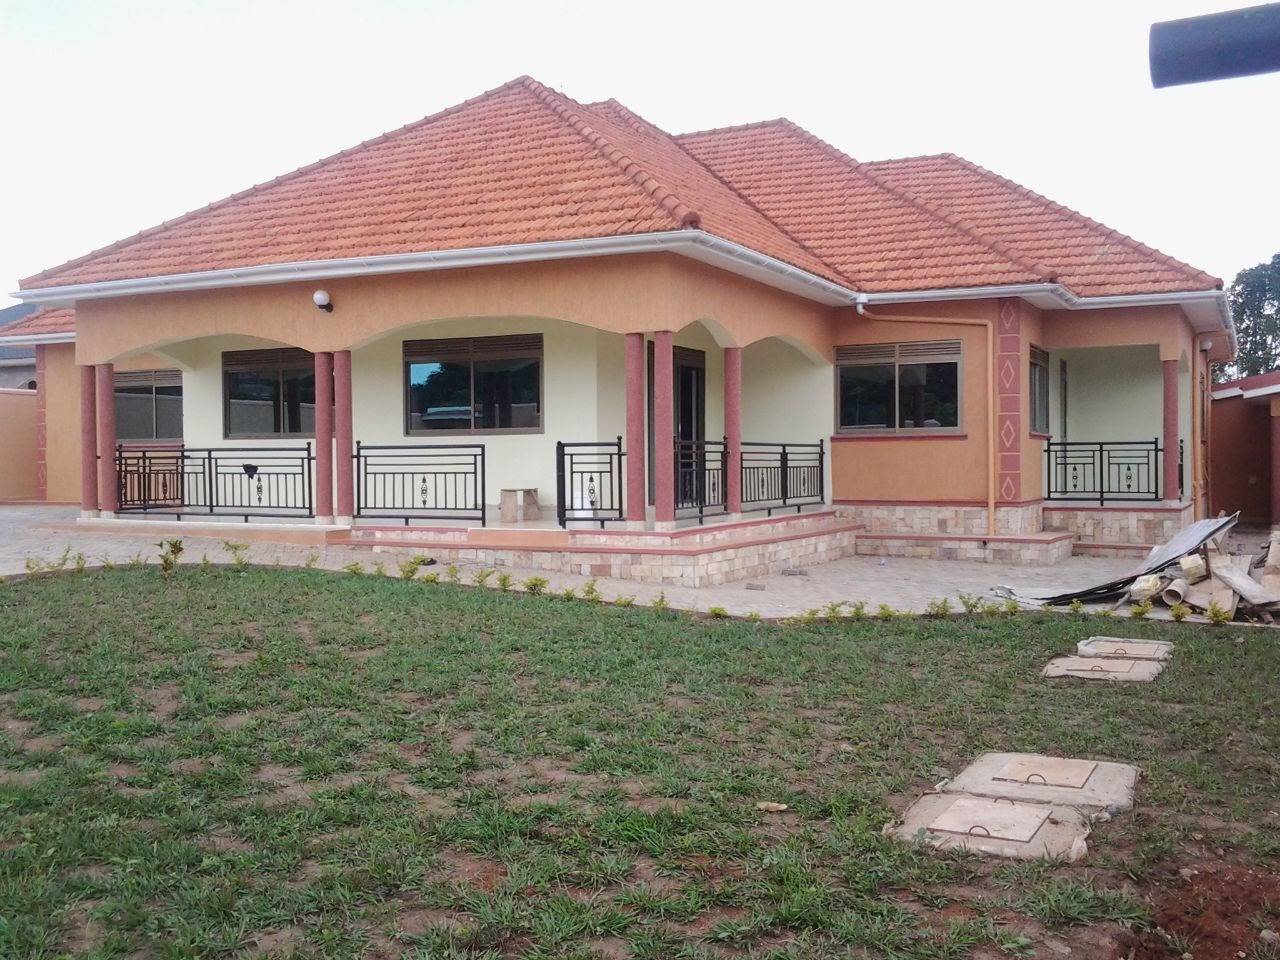 HOUSES FOR SALE KAMPALA, UGANDA: HOUSE FOR SALE BUWATE KAMPALA, UGANDA